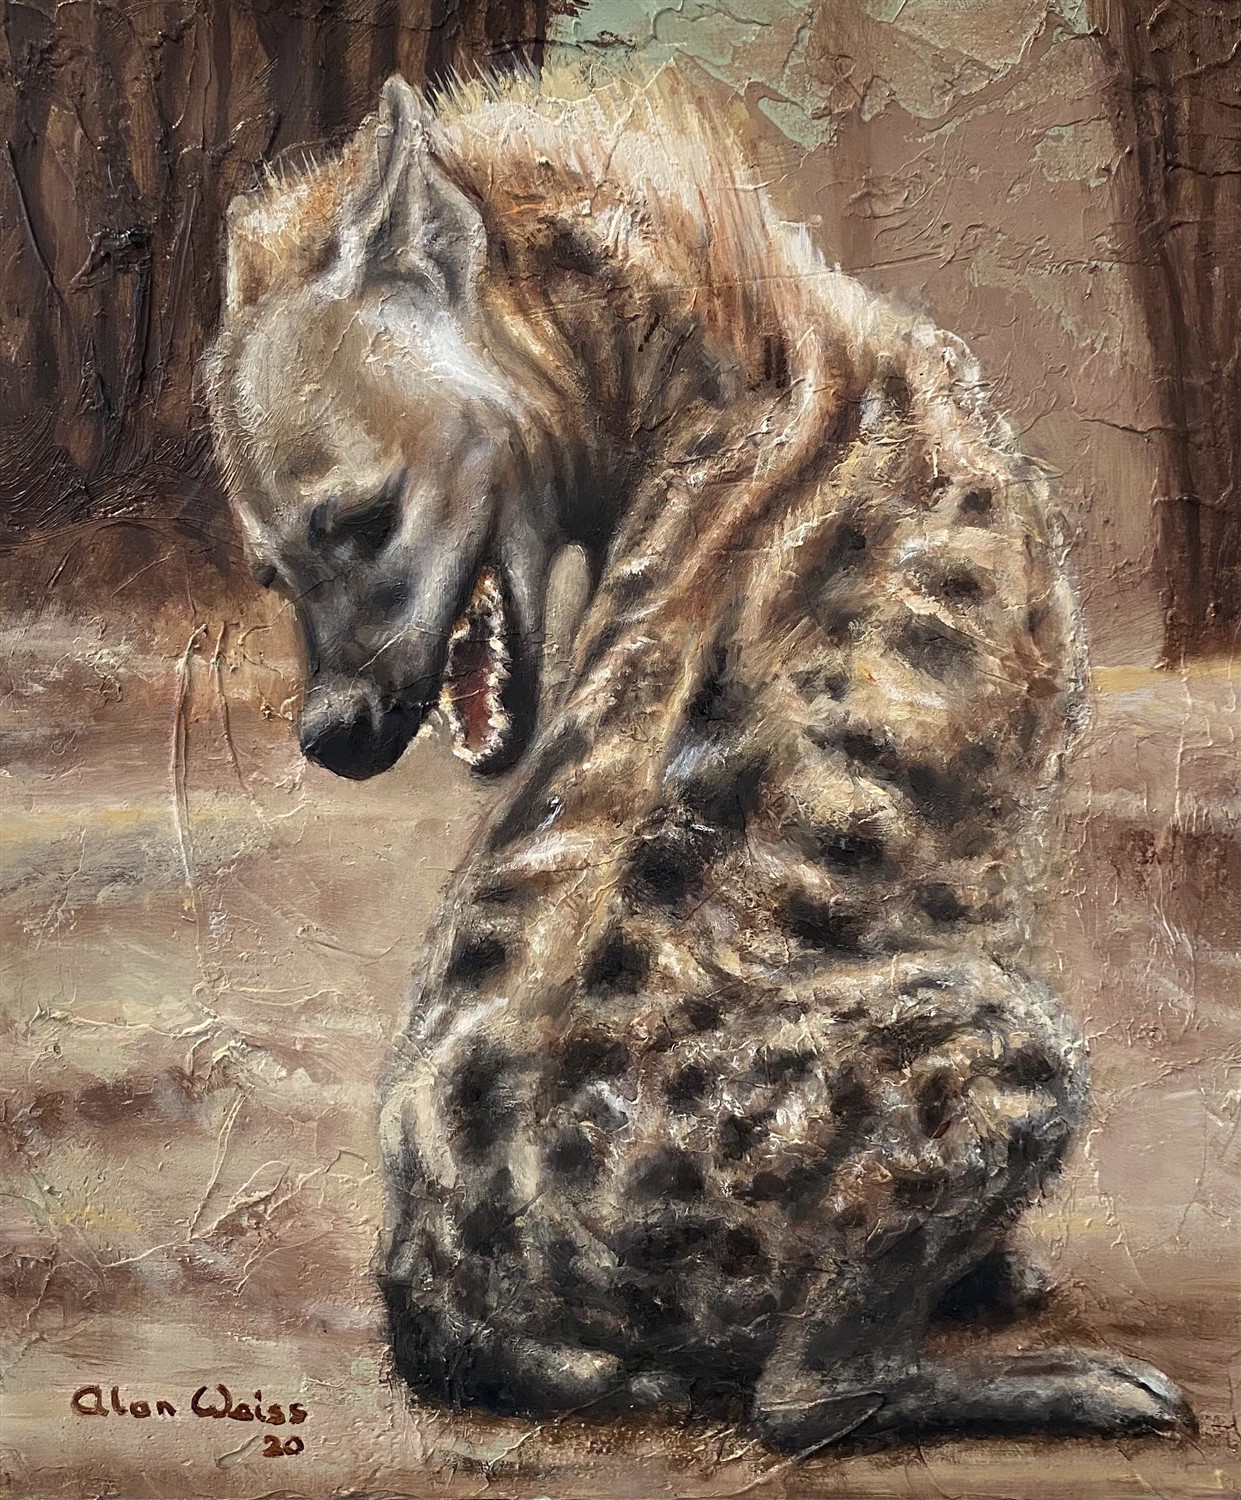 hyenastudy (1241 x 1500)